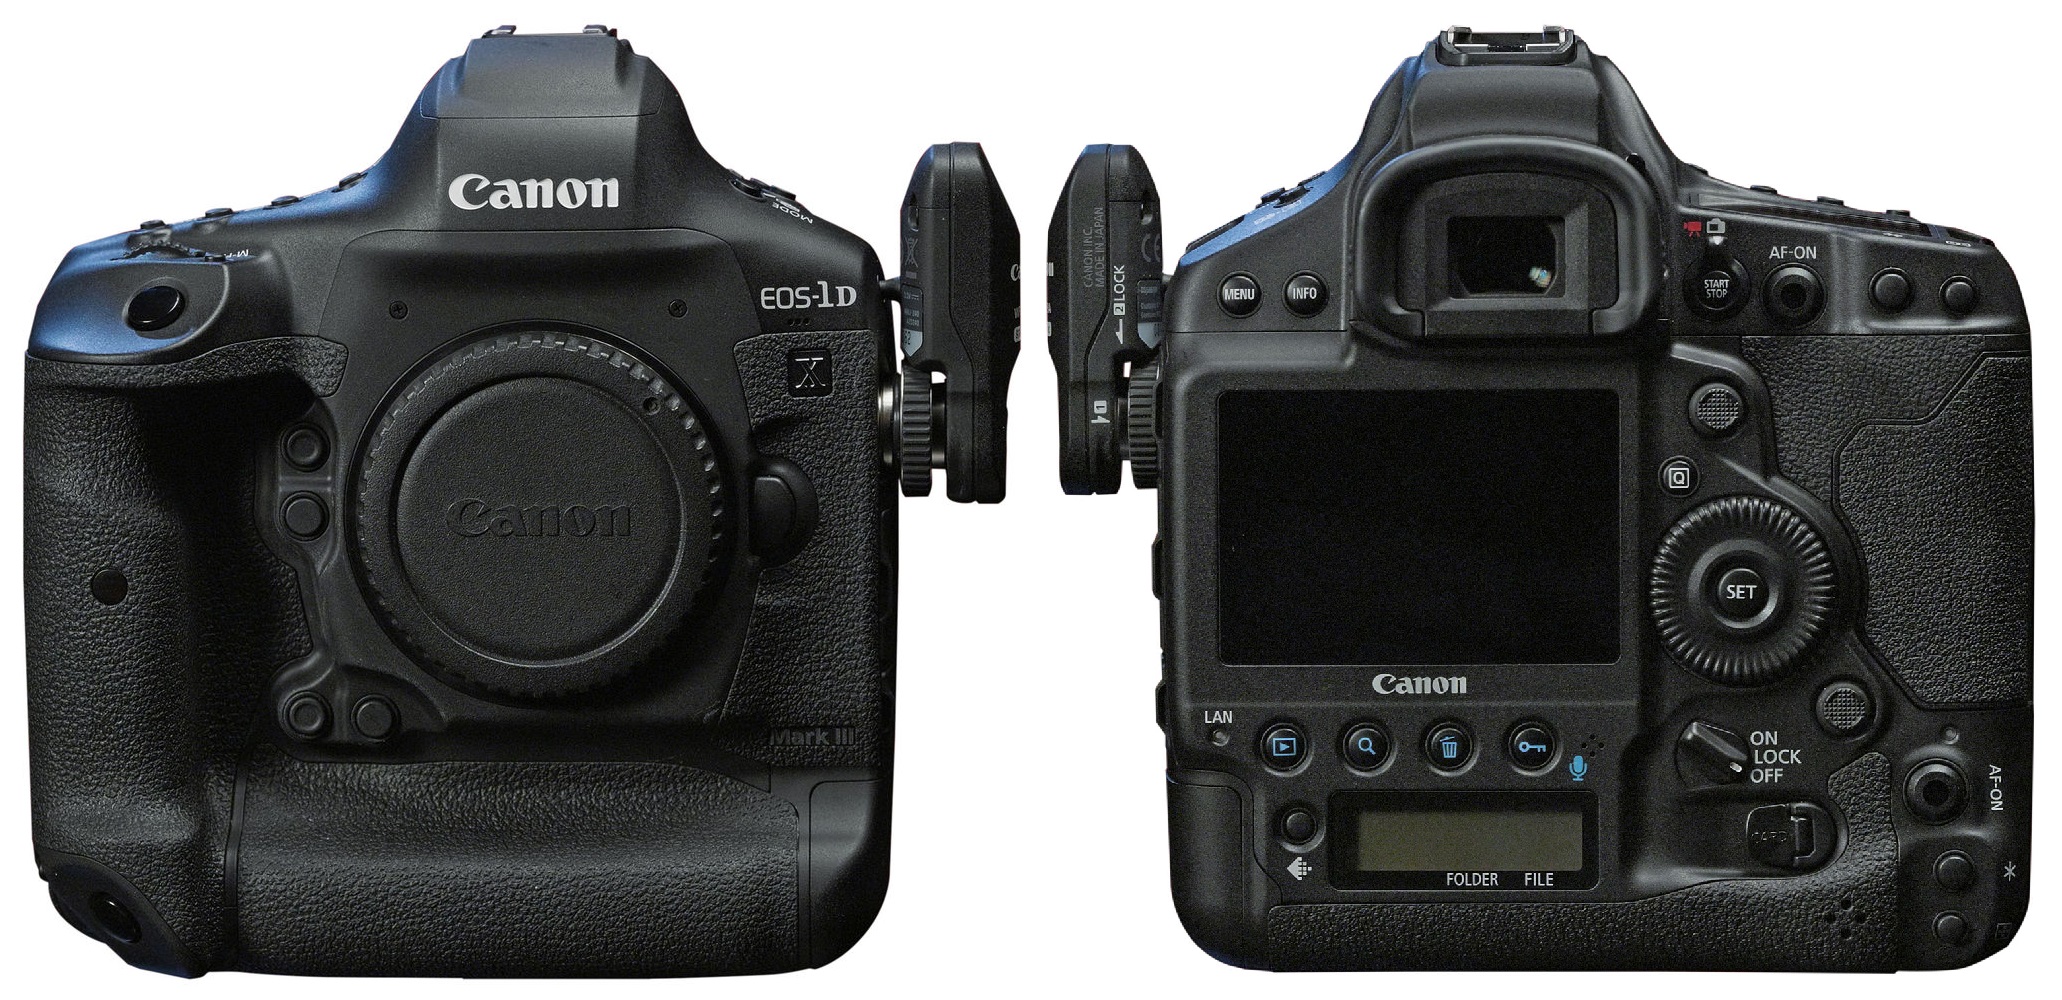 Canon Eos 1dx Mark Iii Development Announced 4k 10 Bit 4 2 2 And Raw Video Internally Cined